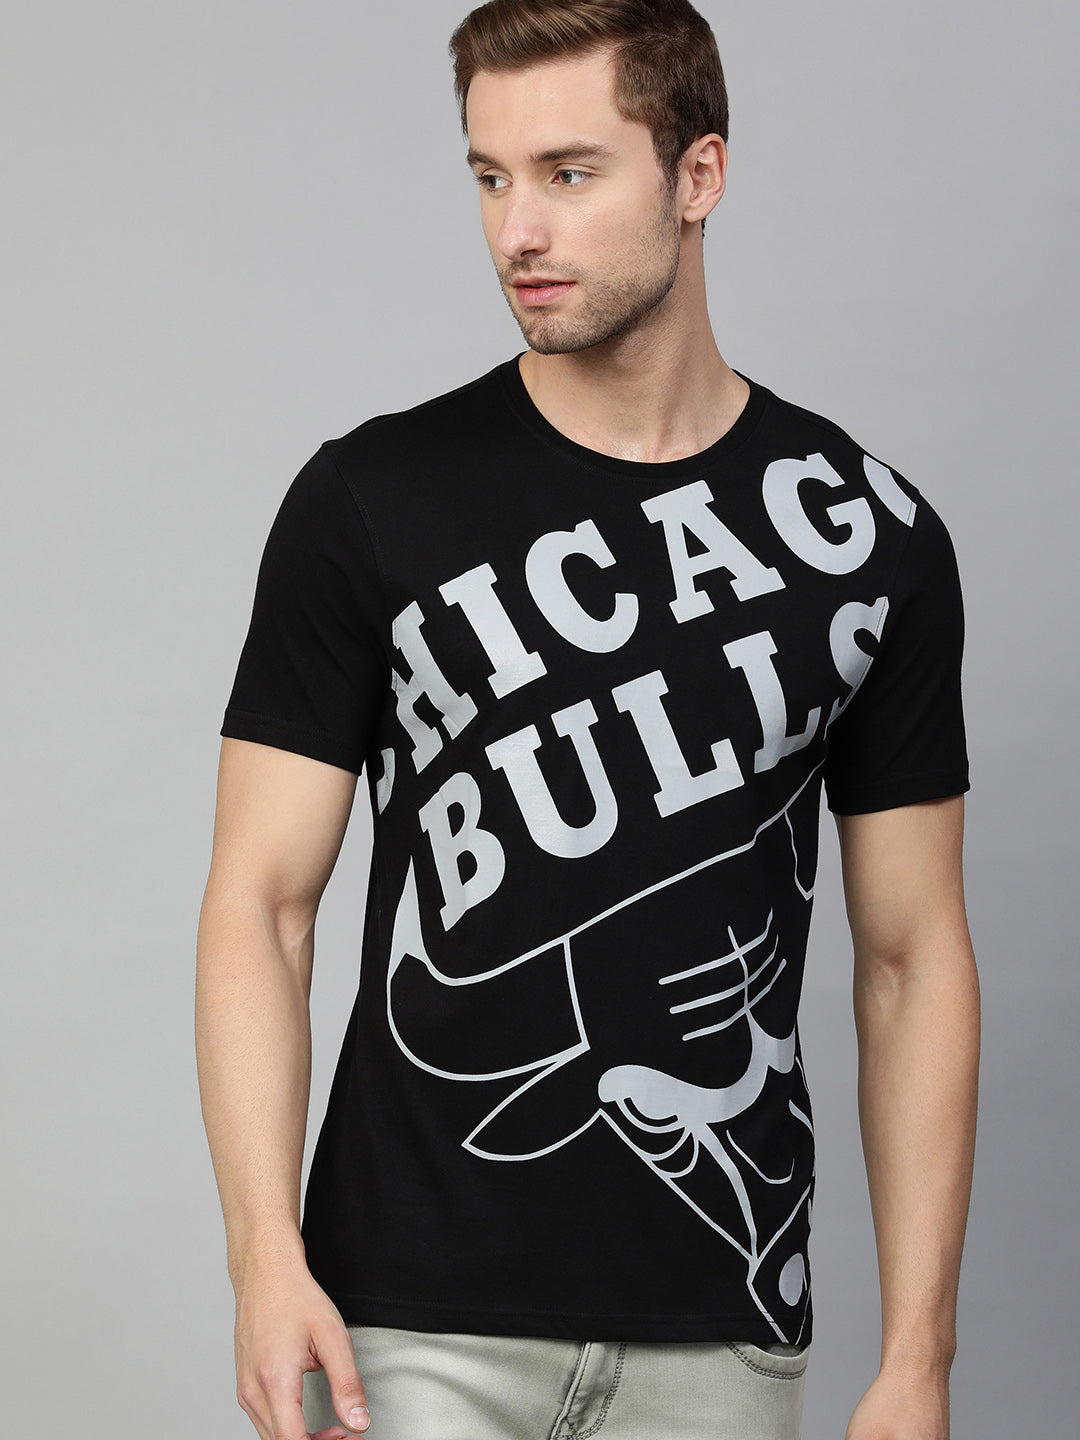 Bull Shirt Tee | Steel City Brand | Funny Graphic T-Shirt S / Gray